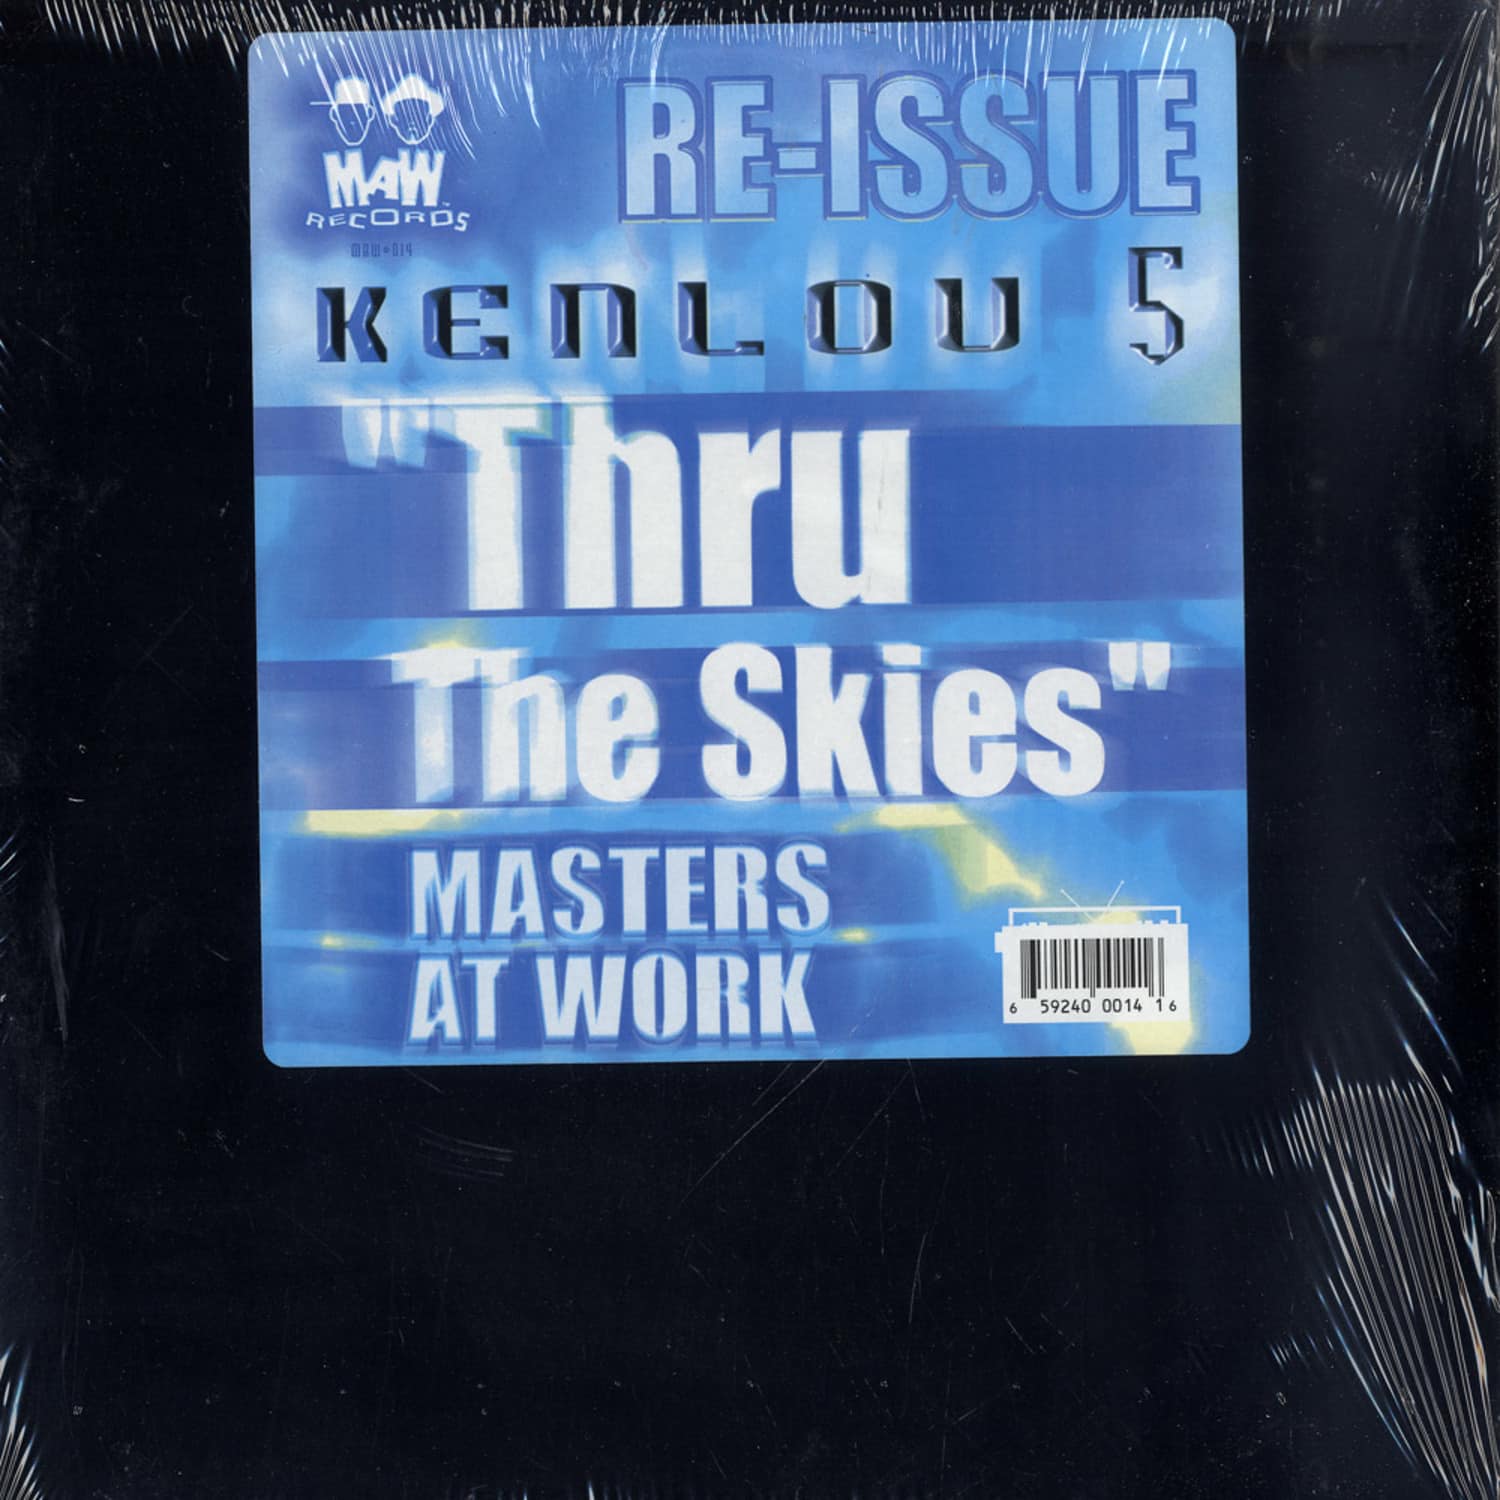 Kenlou 5 - THRU THE SKIES